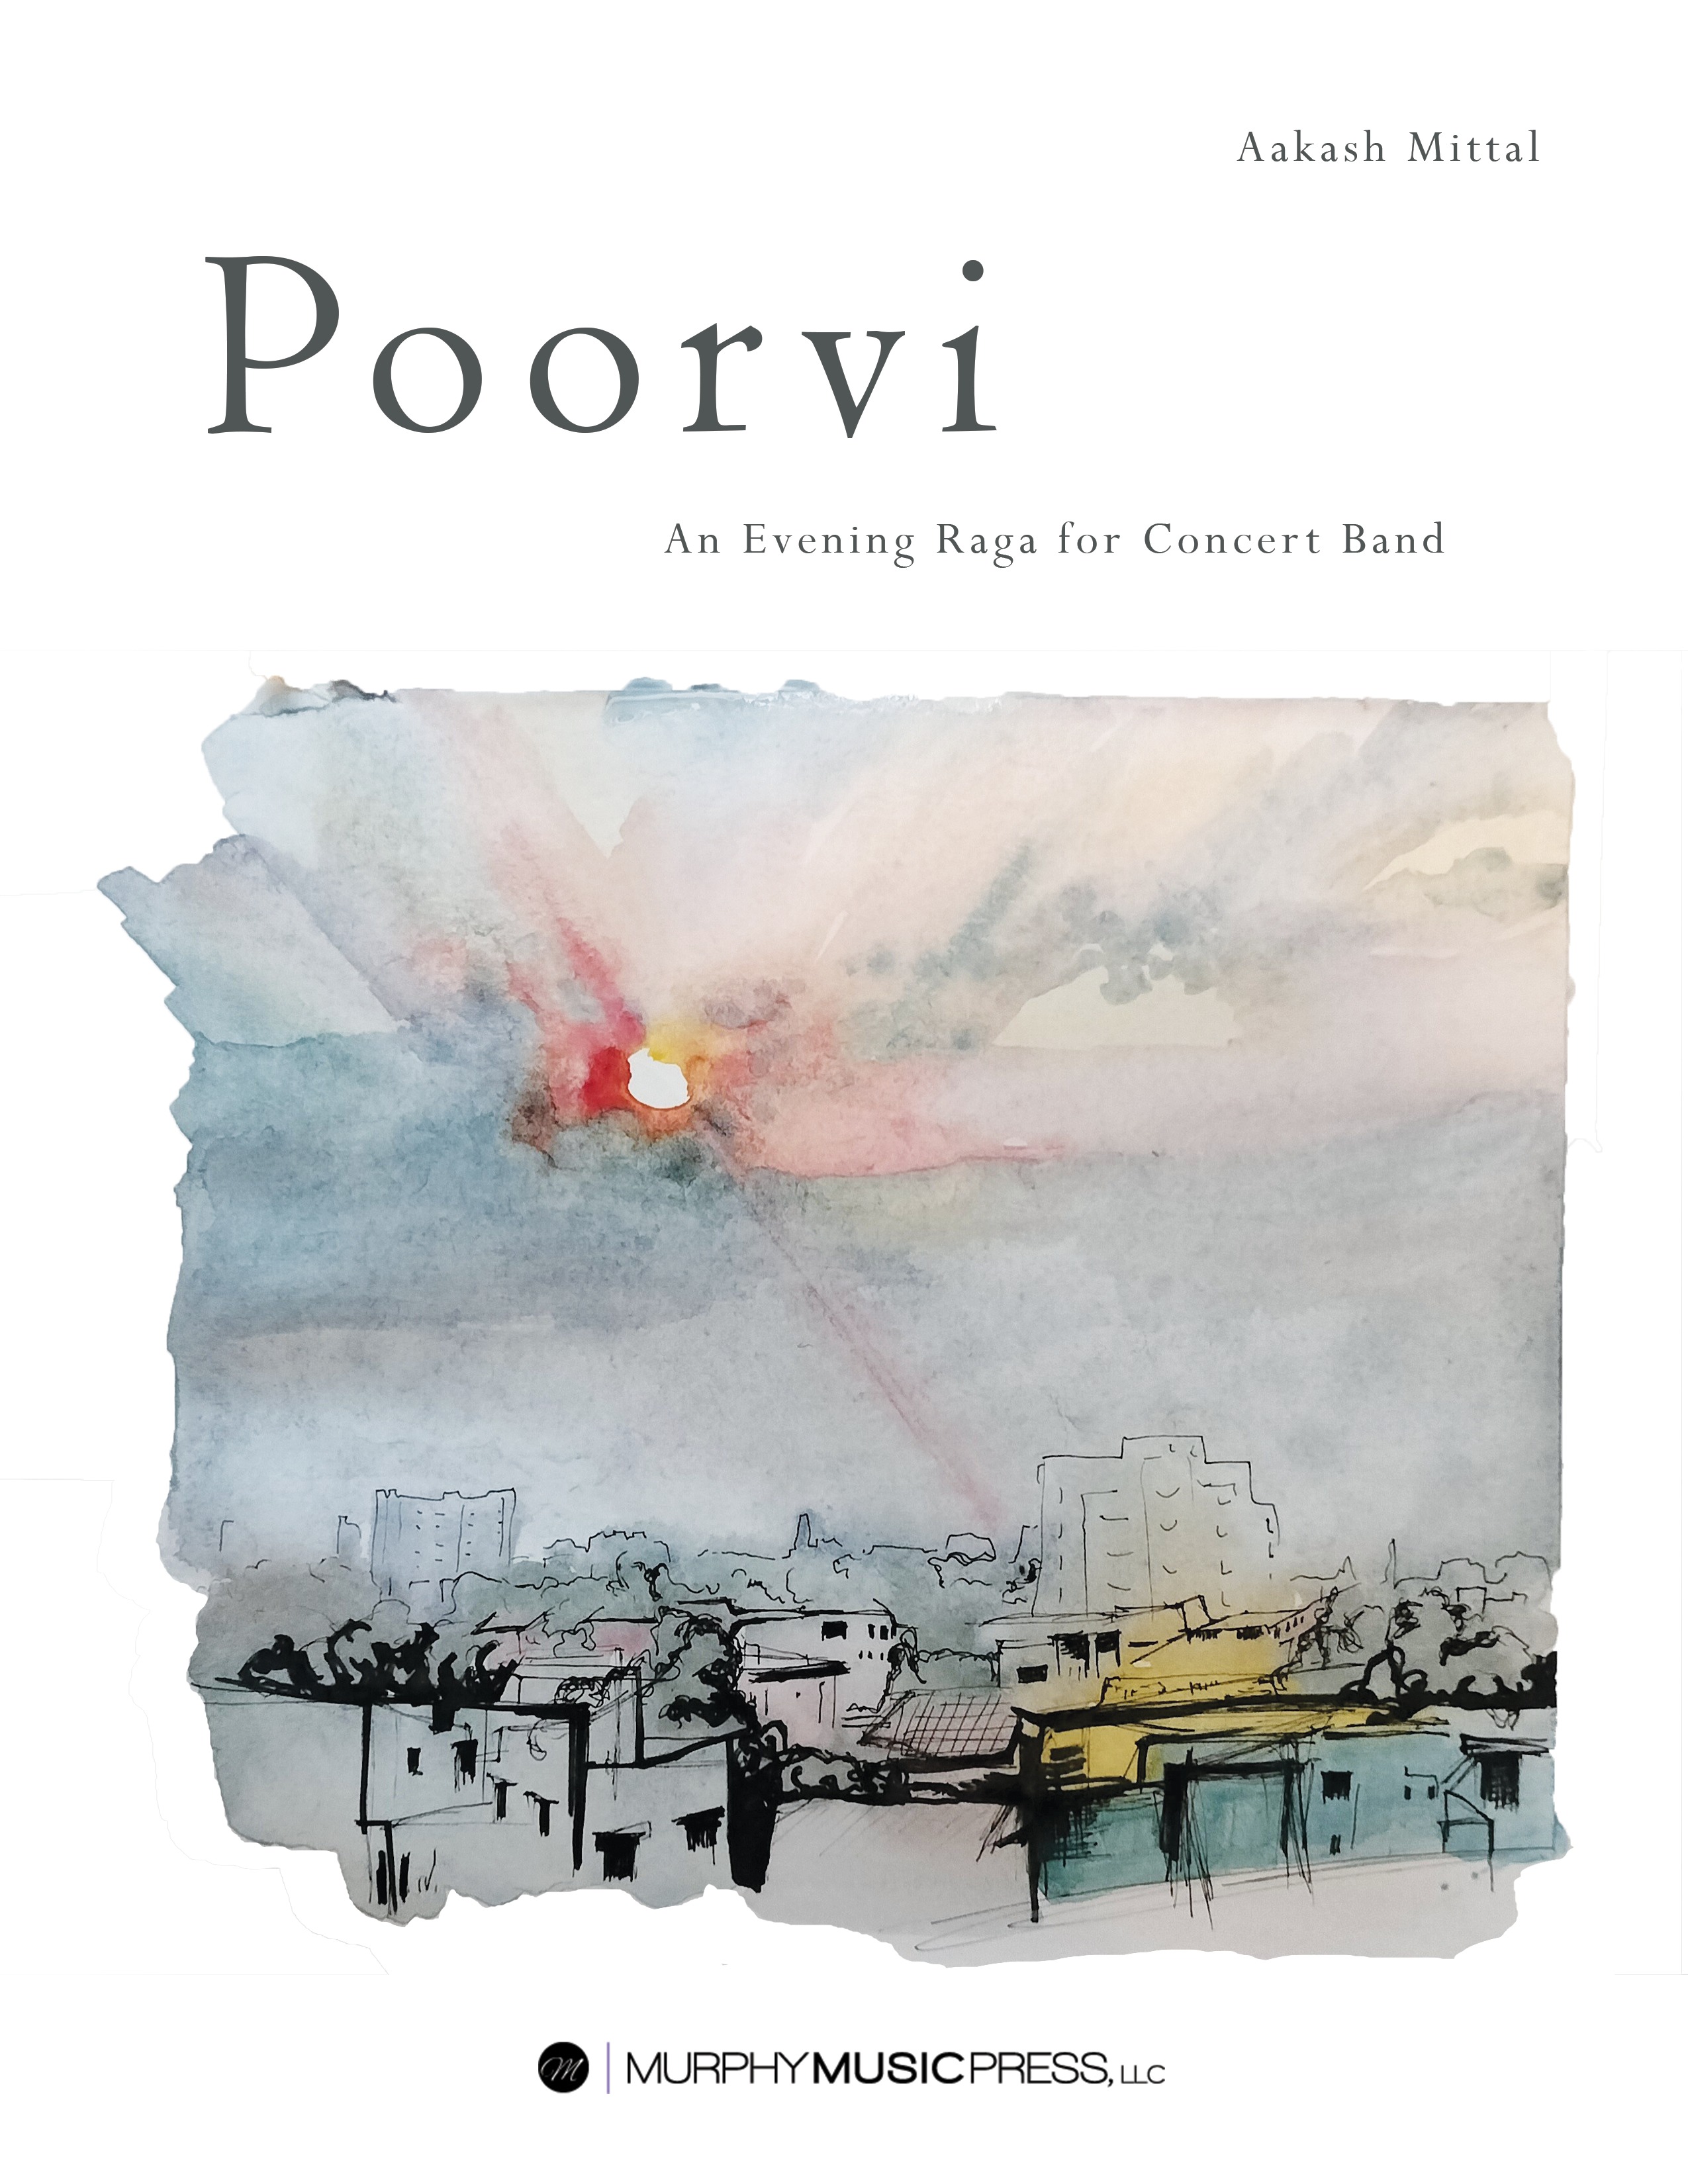 Poorvi by Aakash Mittal